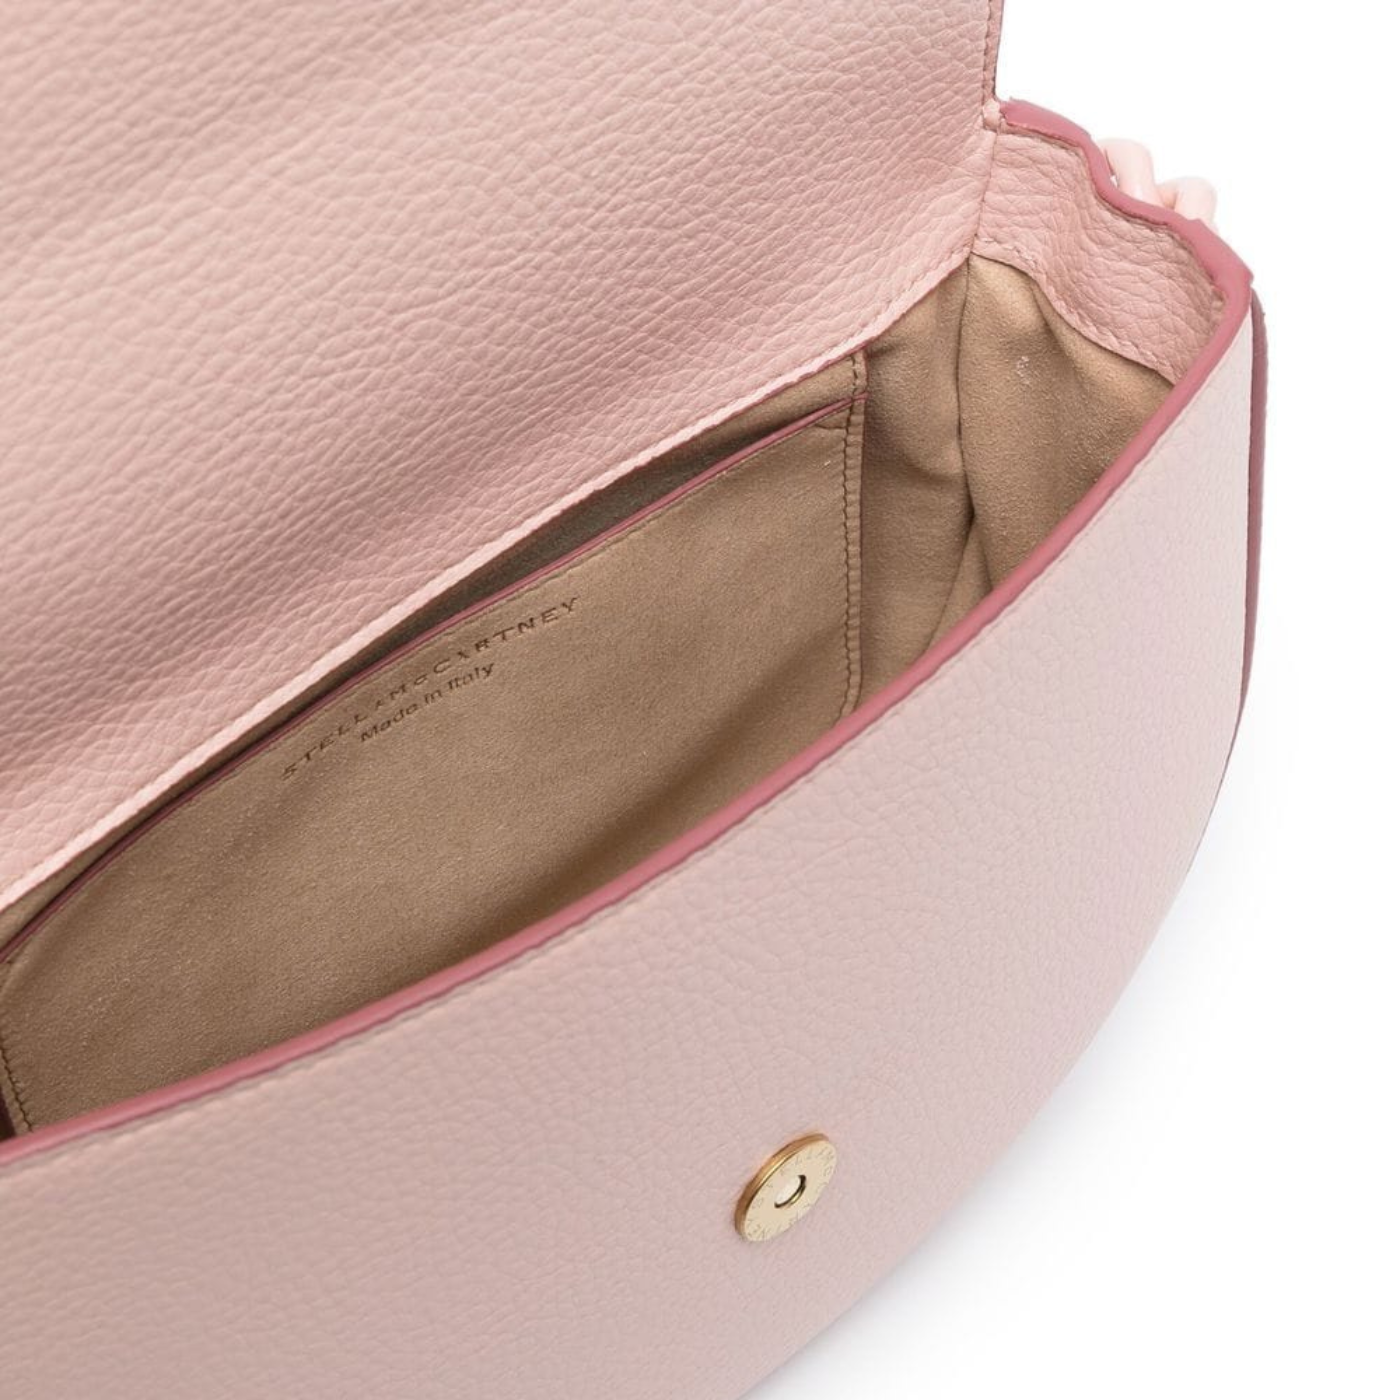 Frayme Medium Flap Shoulder Bag in Pink Handbags STELLA MCCARTNEY - LOLAMIR